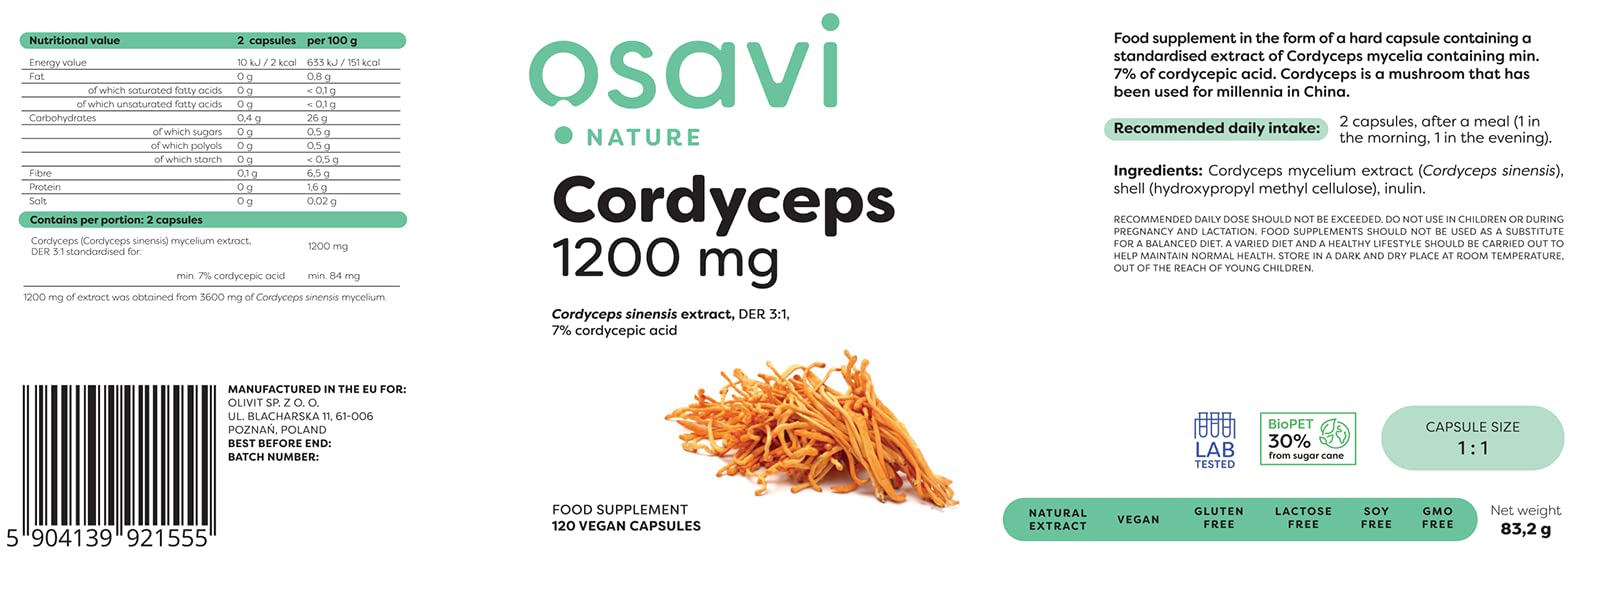 Osavi Cordyceps, 1200mg - 120 vegan caps | High-Quality Mushrooms | MySupplementShop.co.uk